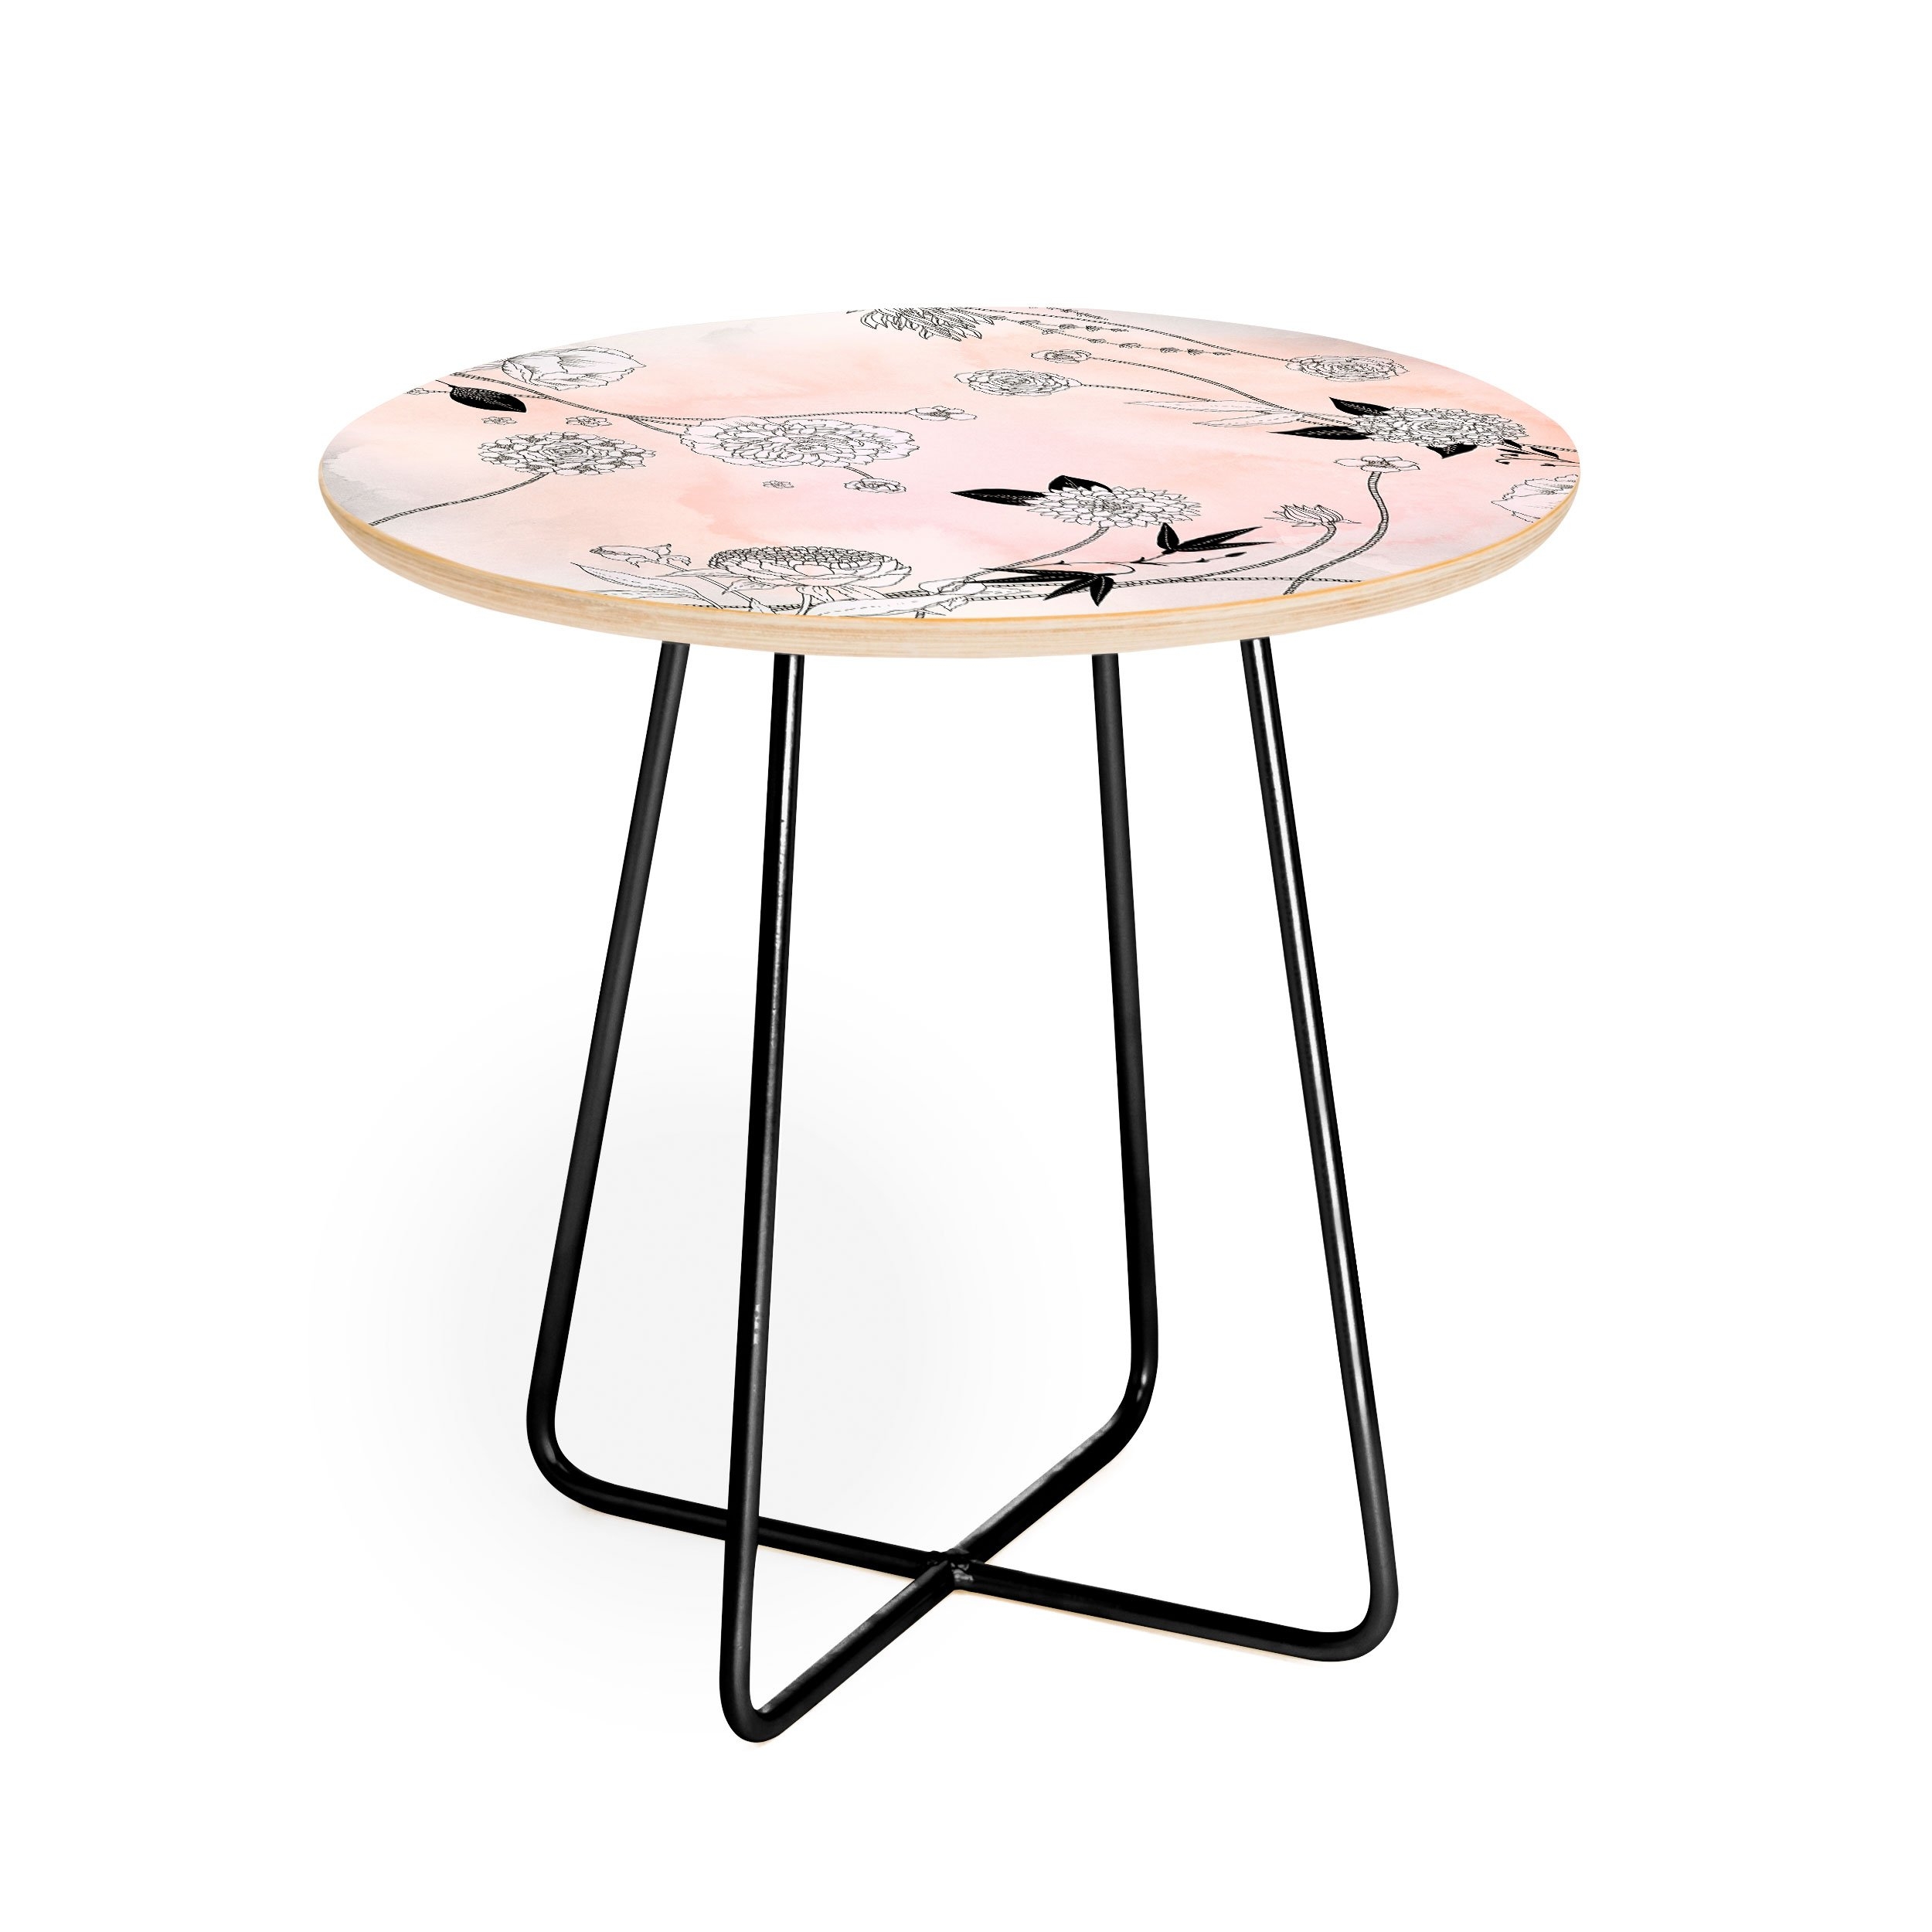 Iveta Abolina Coral Dust Round Side Table - Black Aston Legs - Image 1